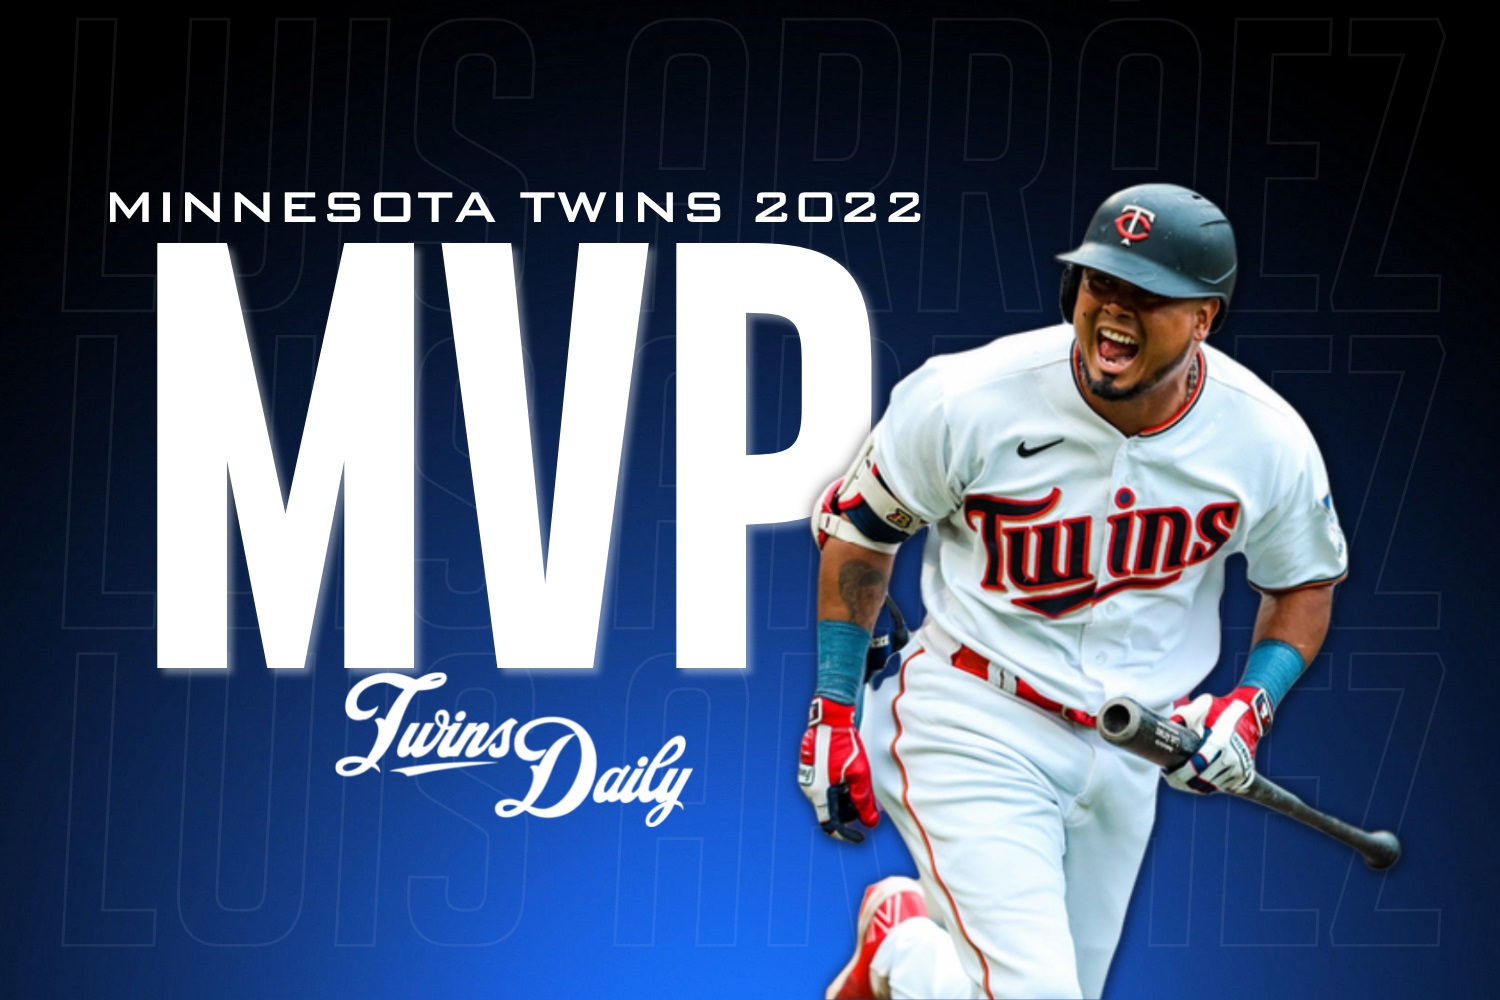 Minnesota Twins - Happy birthday 2️⃣ you, Luis Arraez!